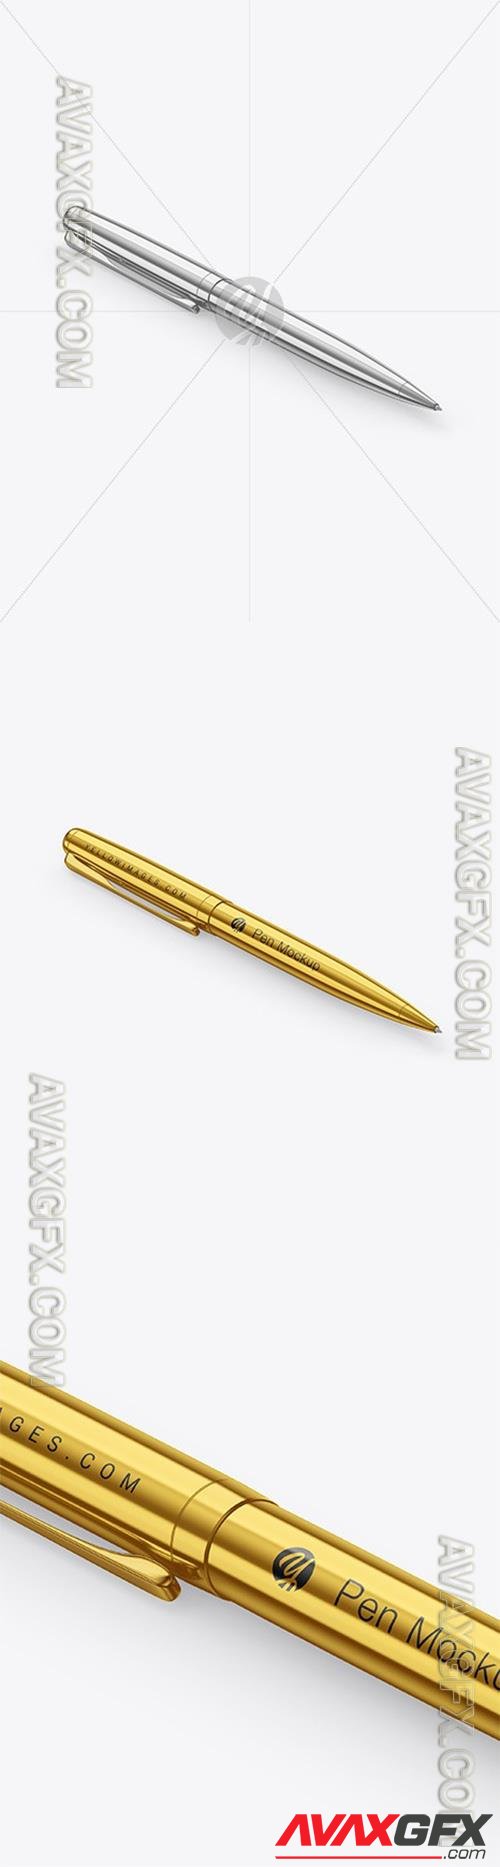 Glossy Metallic Pen Mockup 65502 TIF